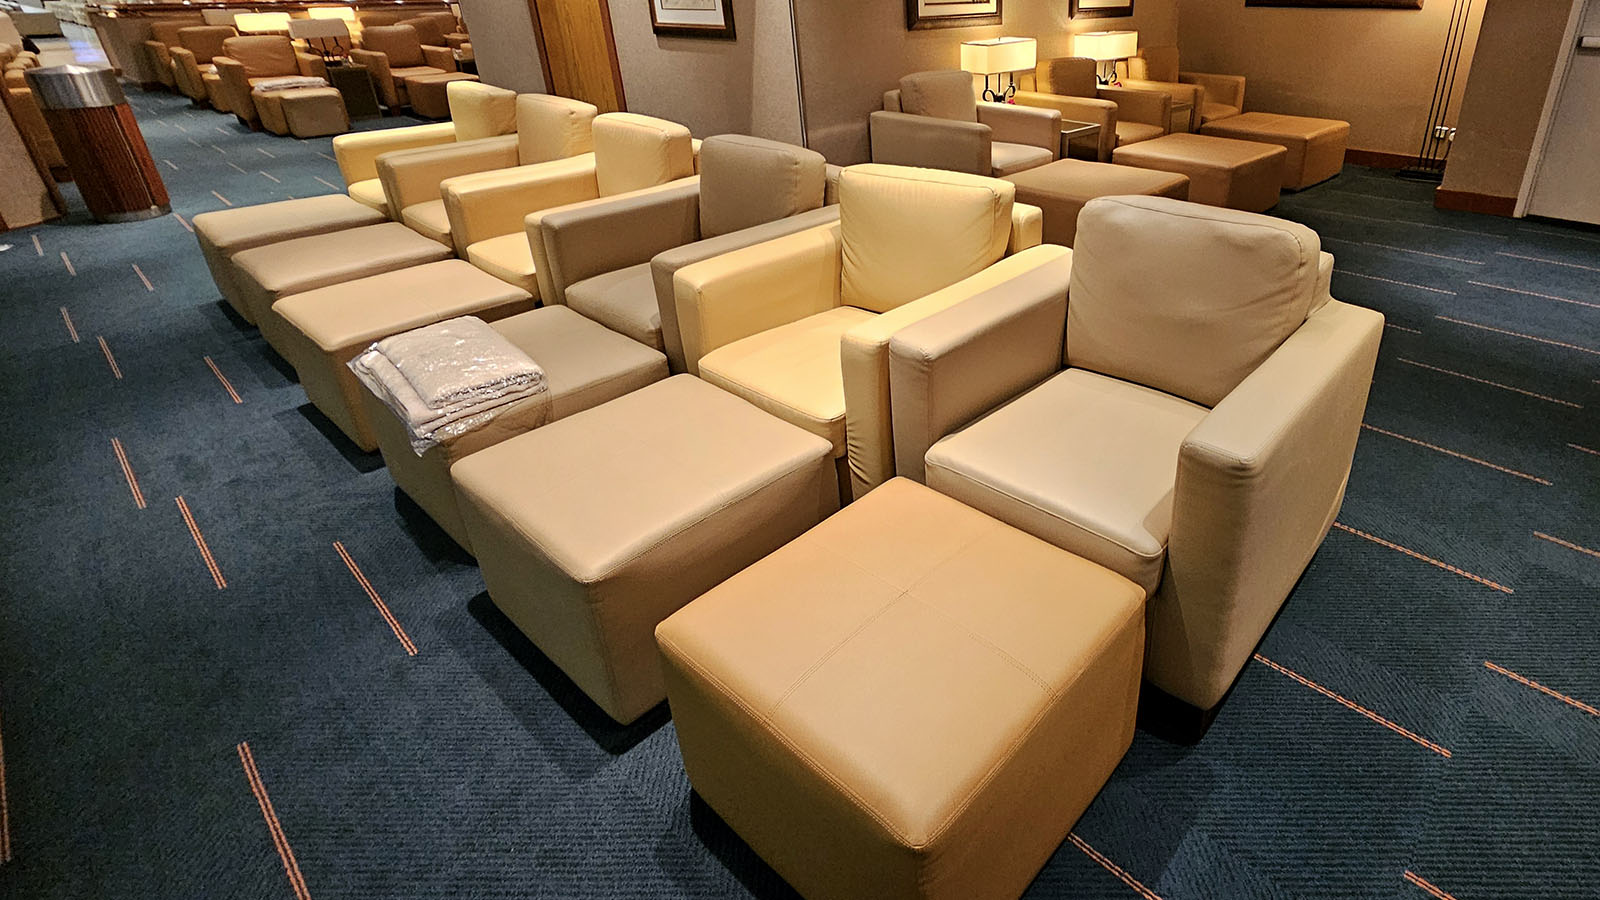 Footstool in the Emirates Business Class Lounge, Dubai T3 Concourse C